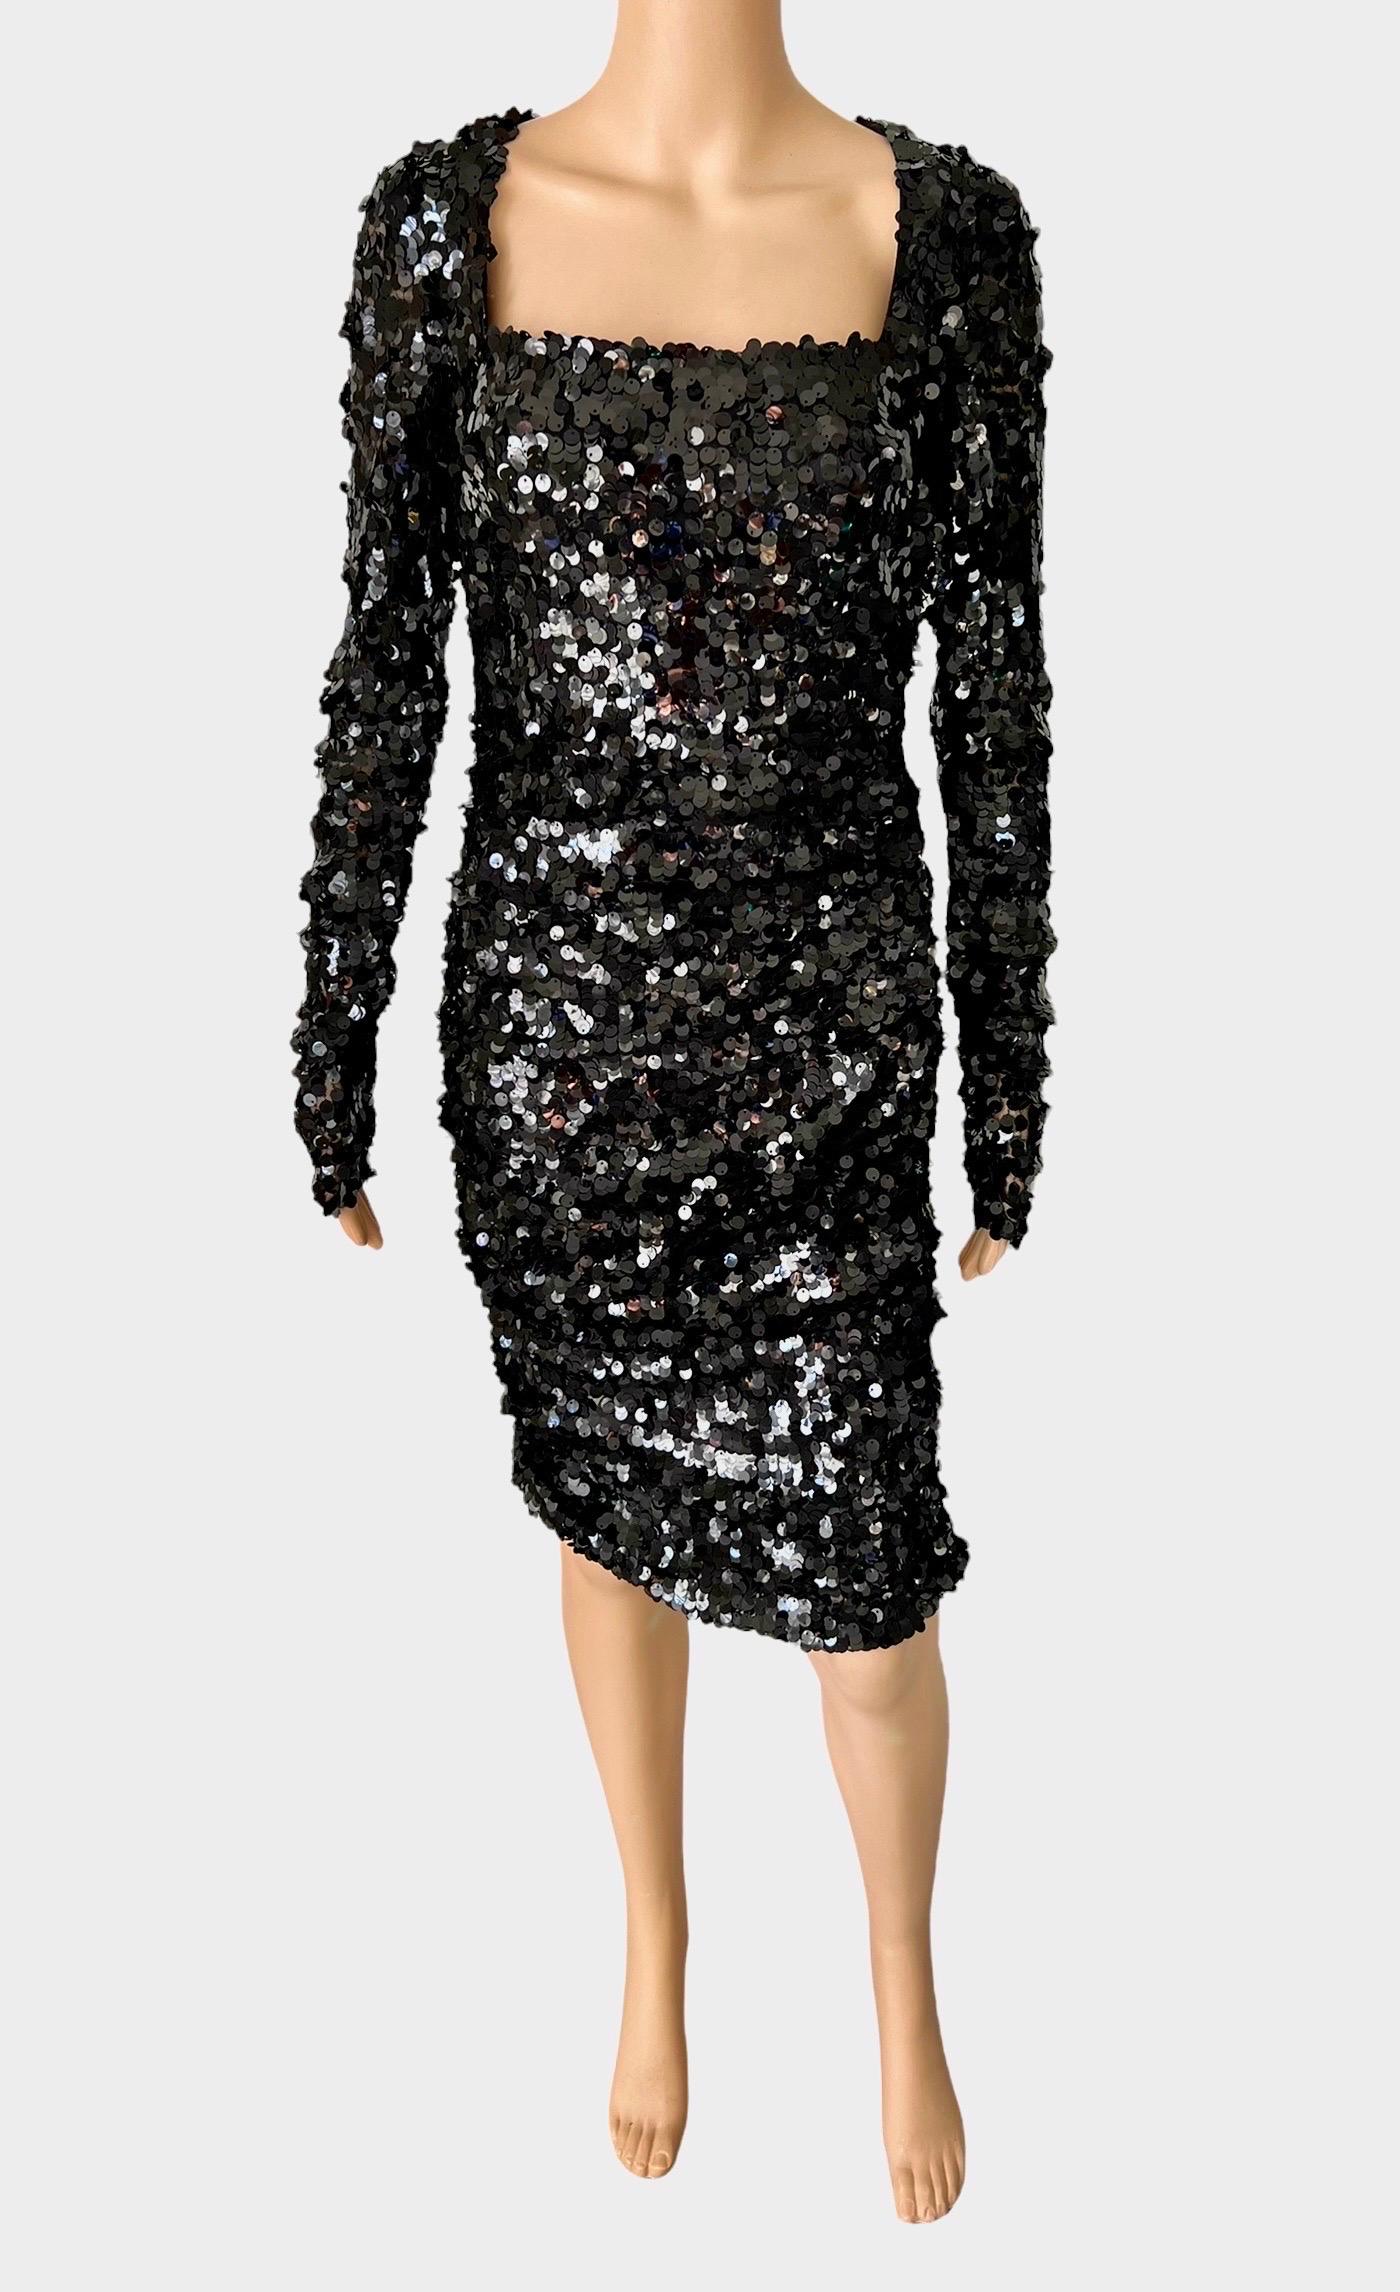 Dolce & Gabbana F/W 2011 Unworn Sequin Embellished Black Evening Dress 2